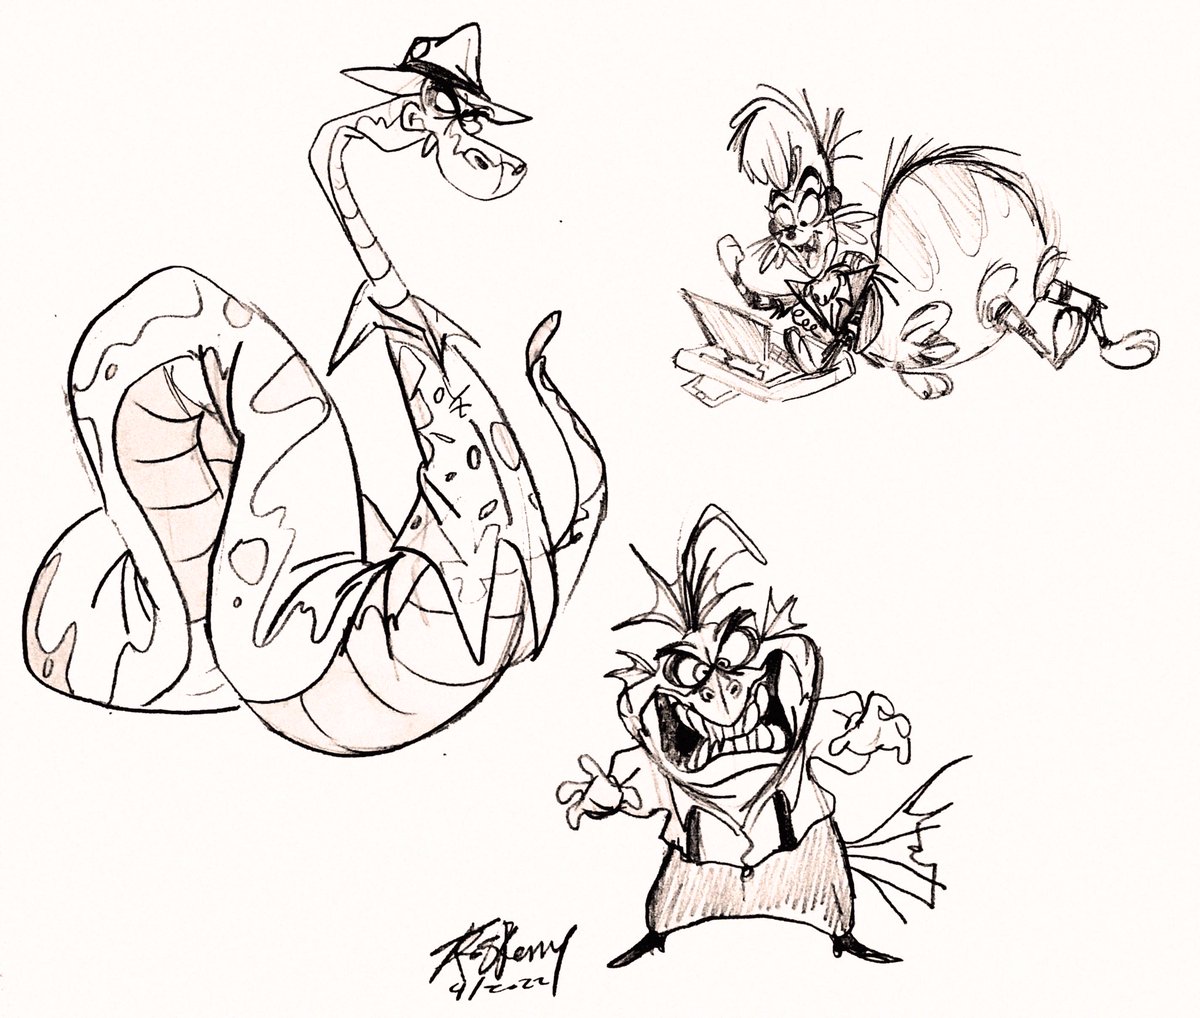 Mr. Snake, Ms. Tarantula and Mr. Piranha quick doodles!! XD 